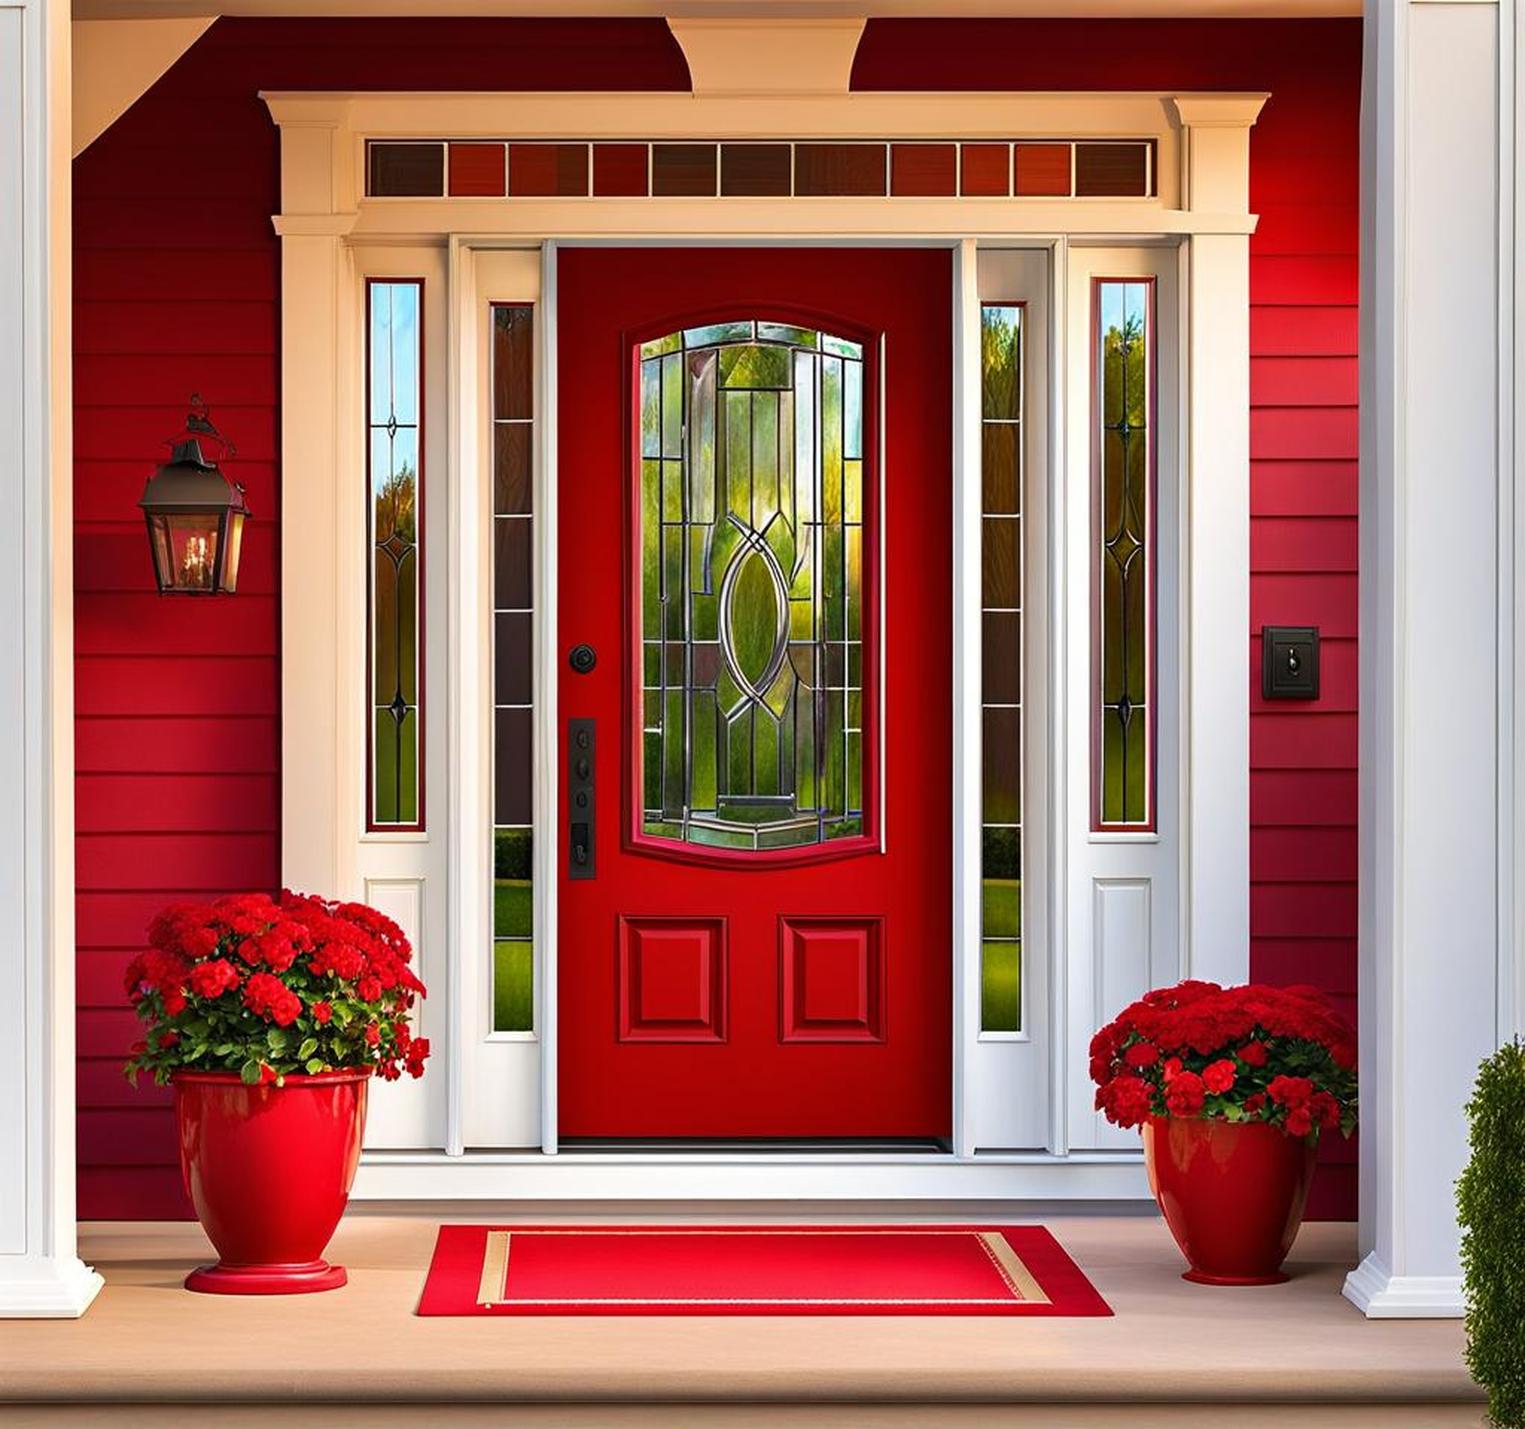 Rejuvenate Your Landscape with a Red Front Door That Pops